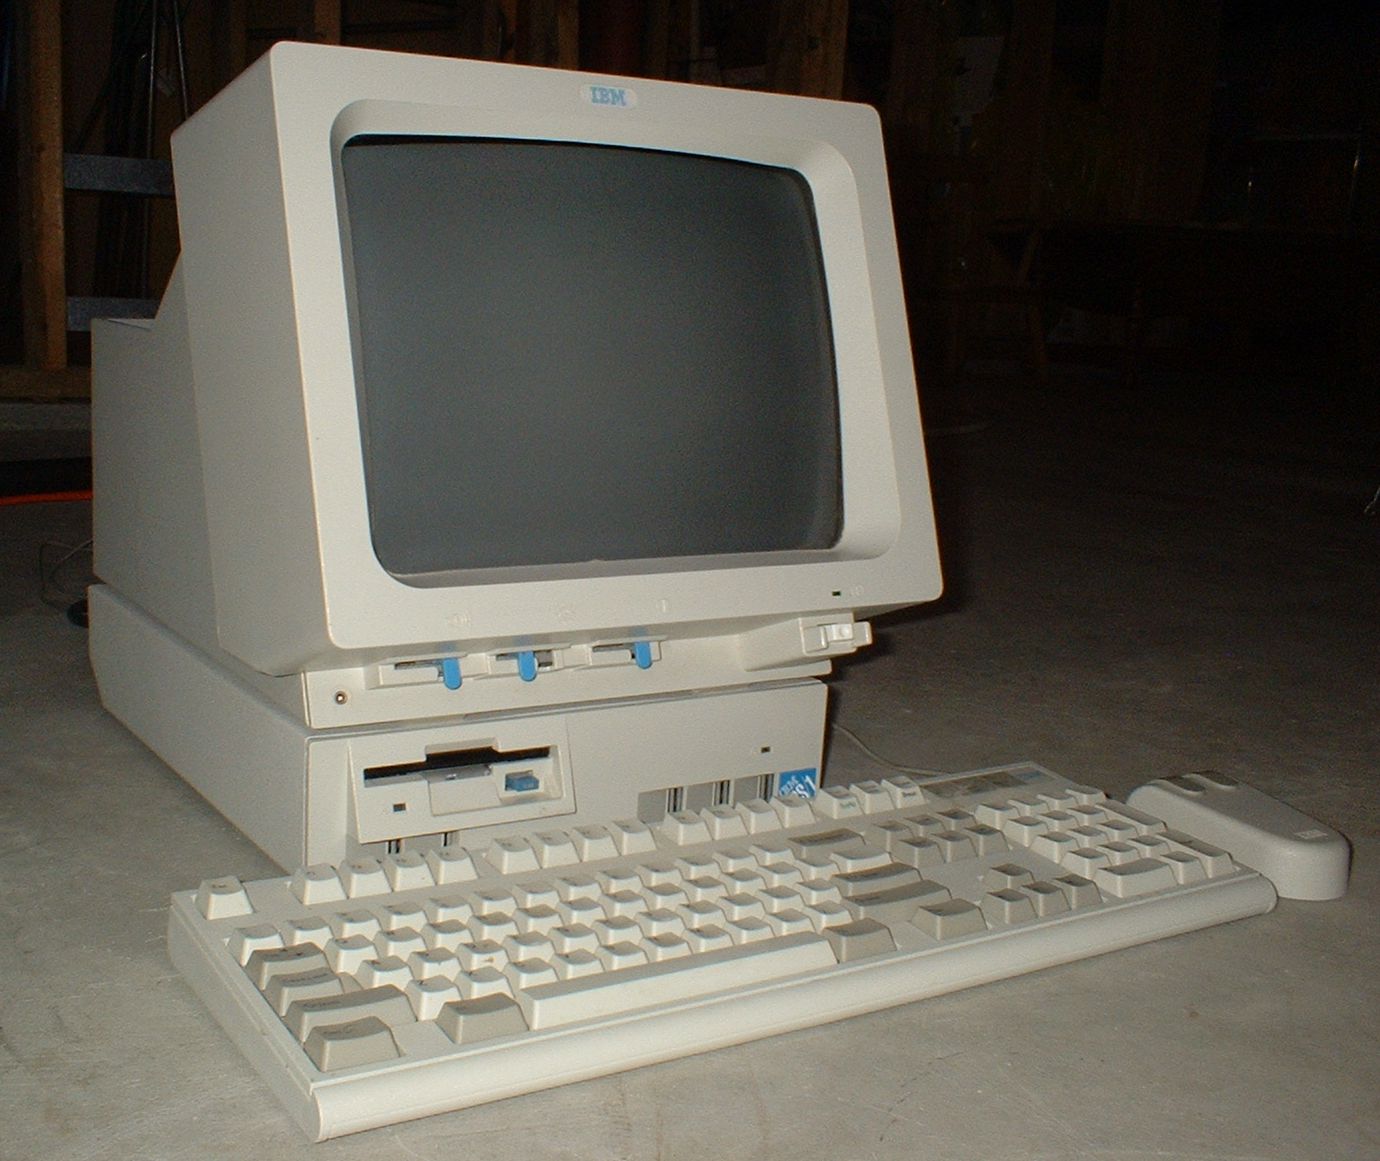 IBM PS1